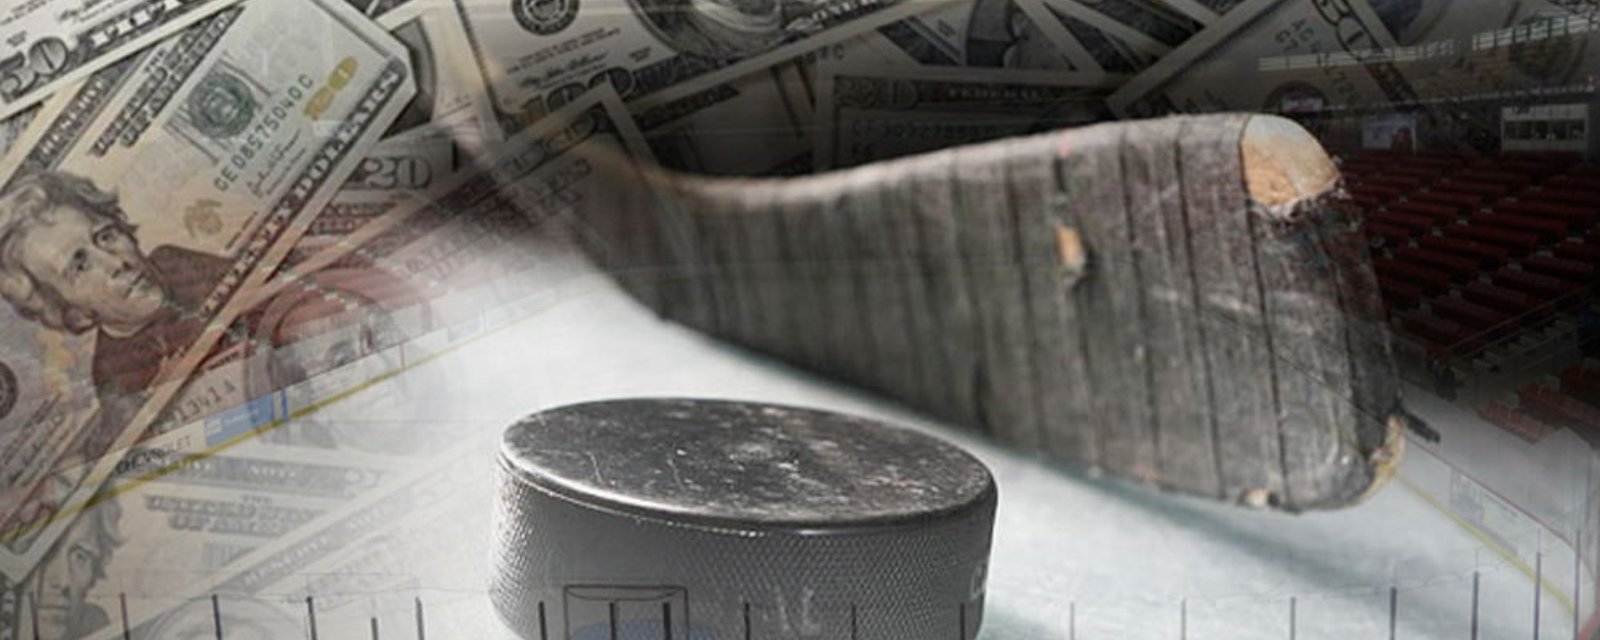 Betting kiosks coming to NHL Arenas this season?